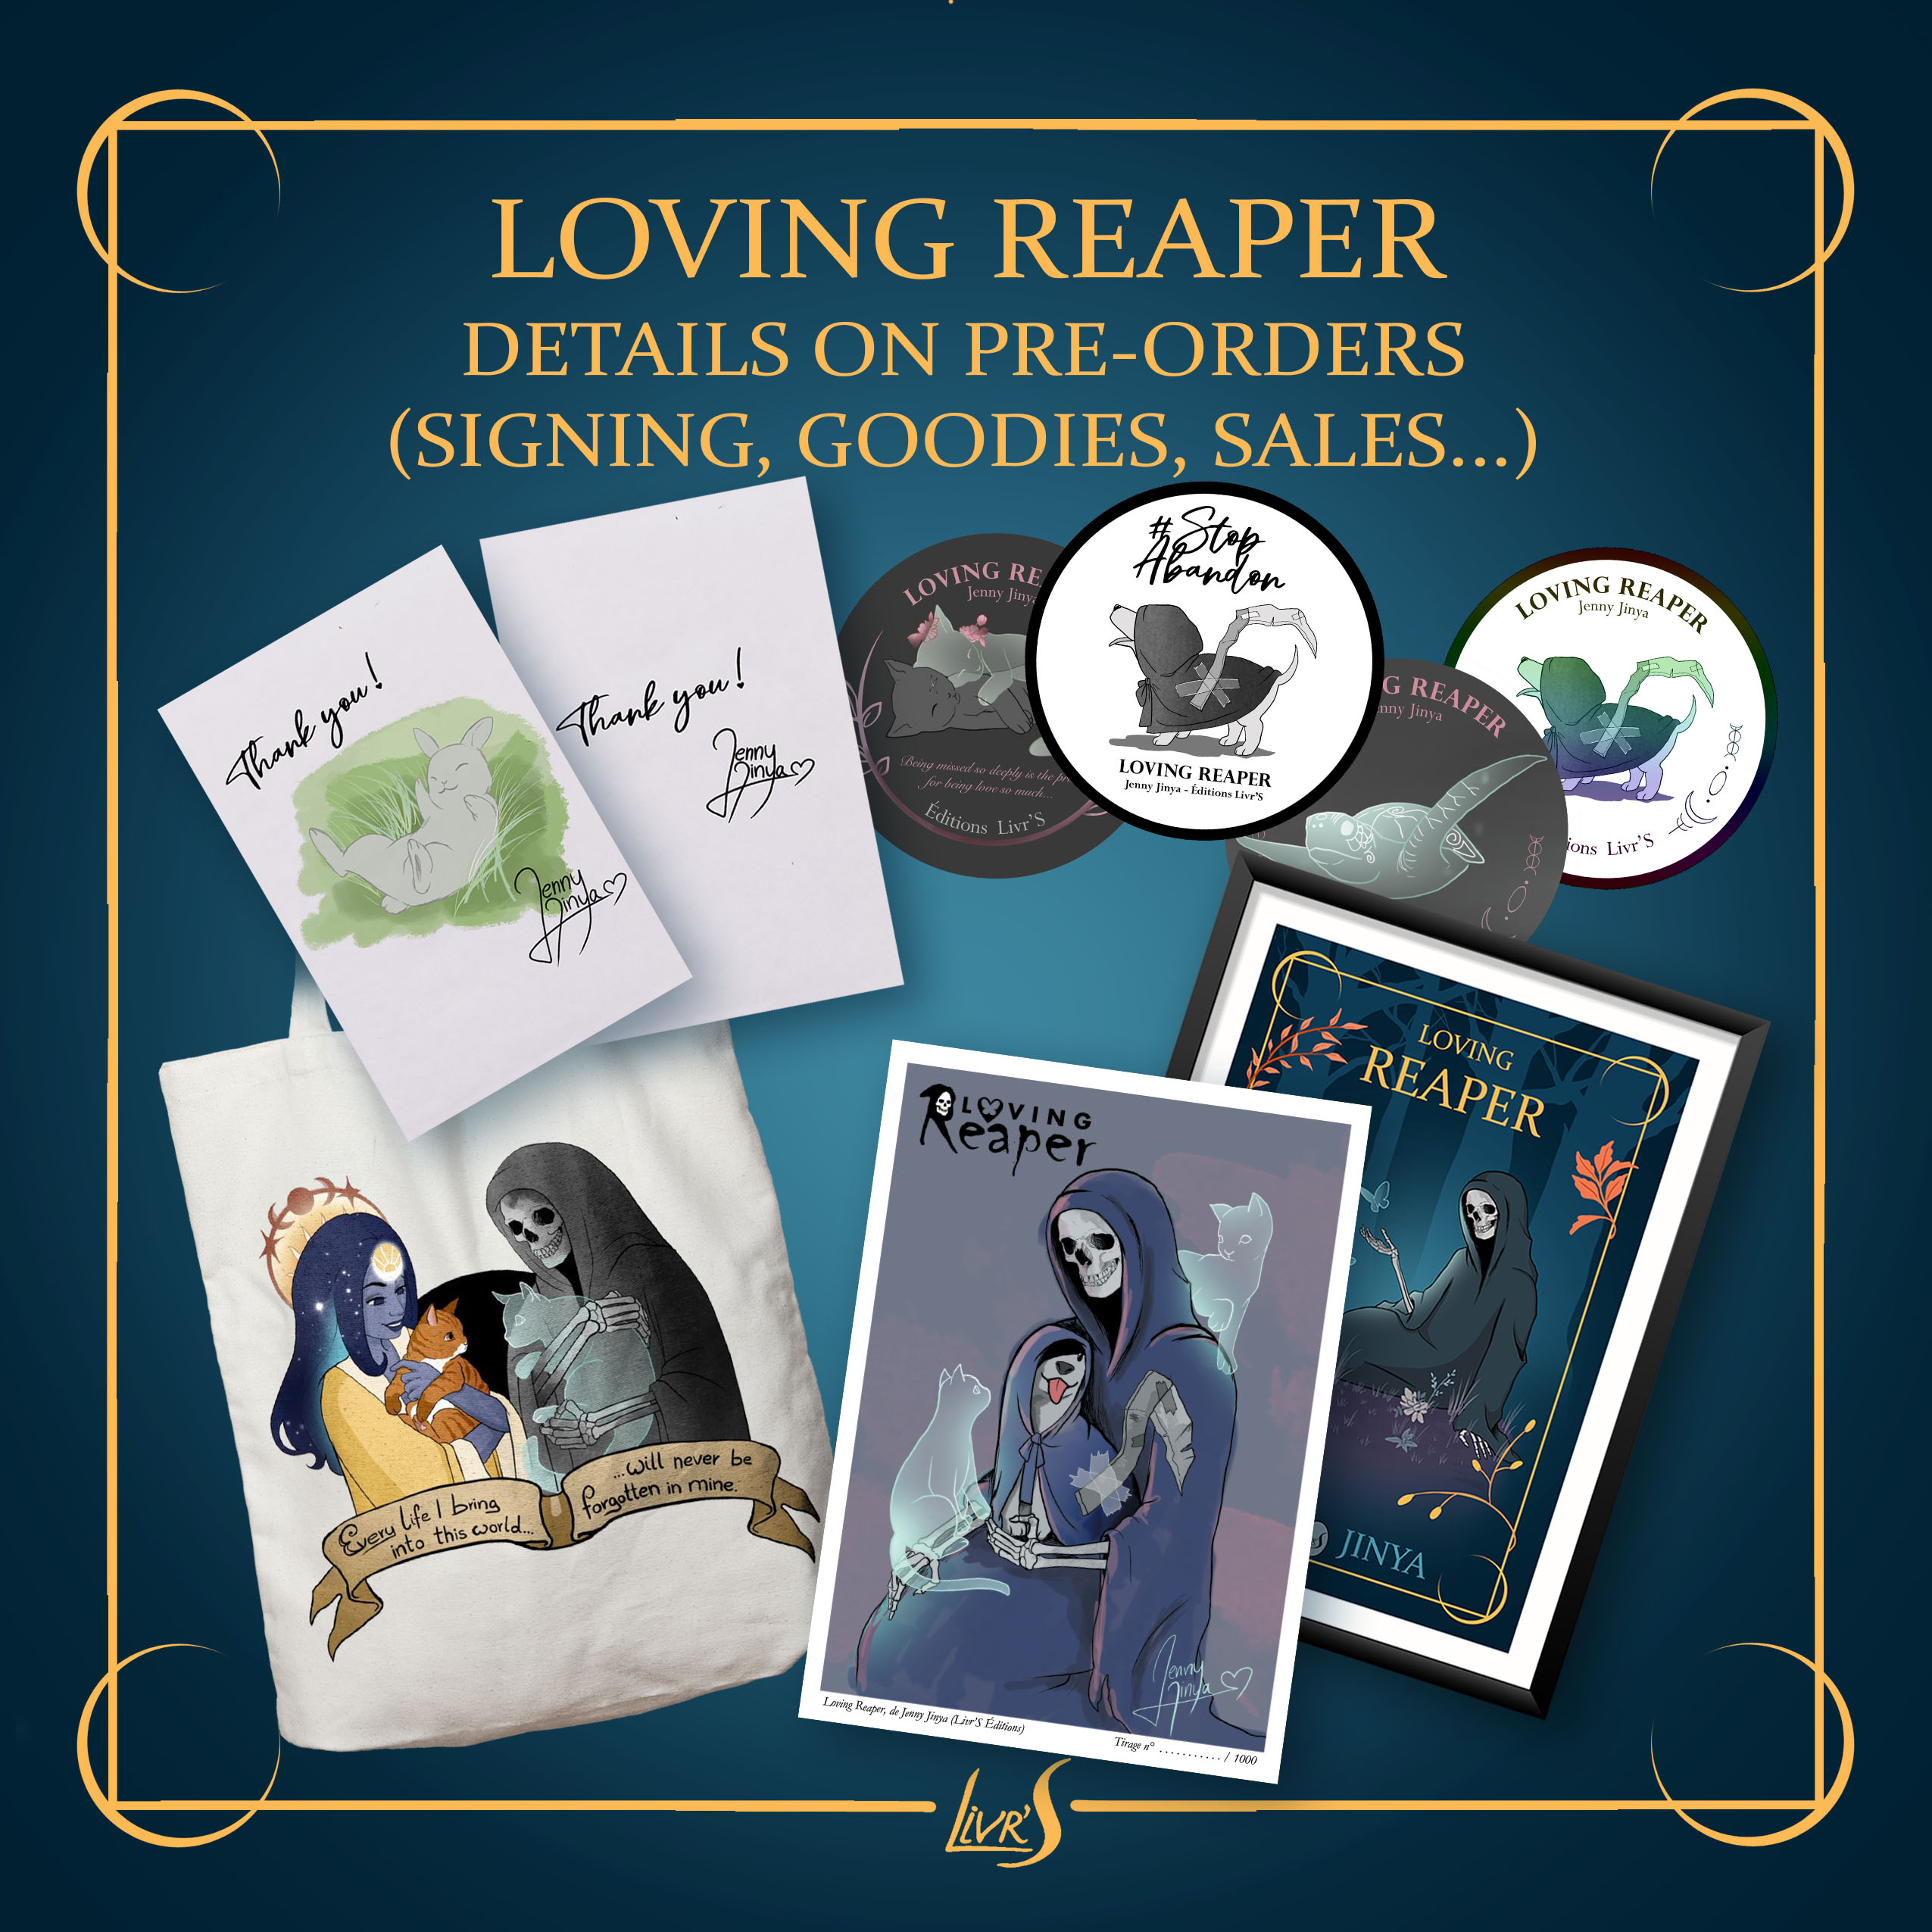 Loving Reaper (english version) - Livr'S Editions